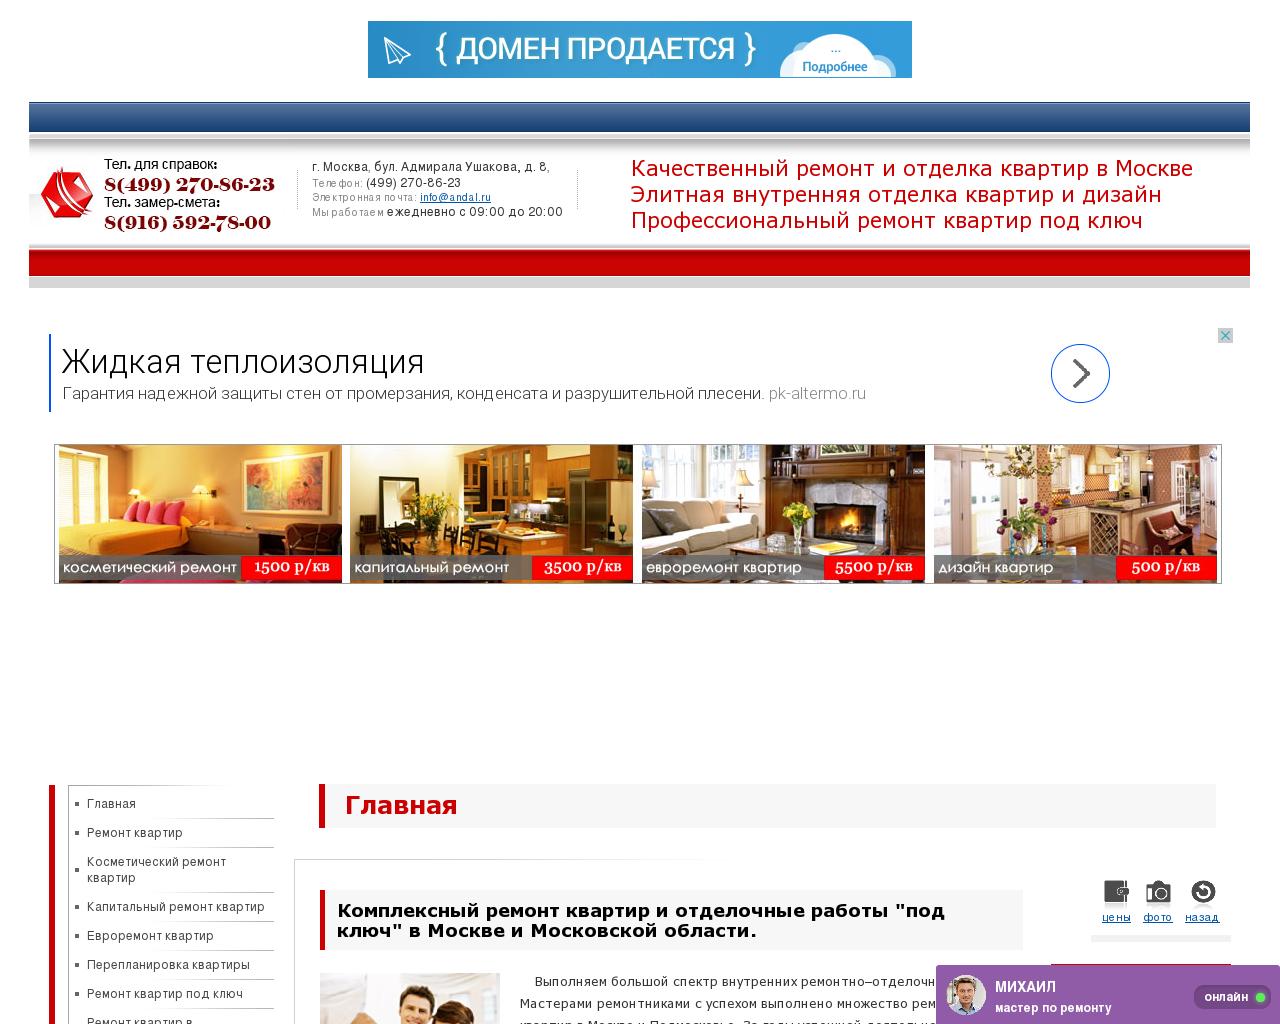 Изображение сайта andal.ru в разрешении 1280x1024